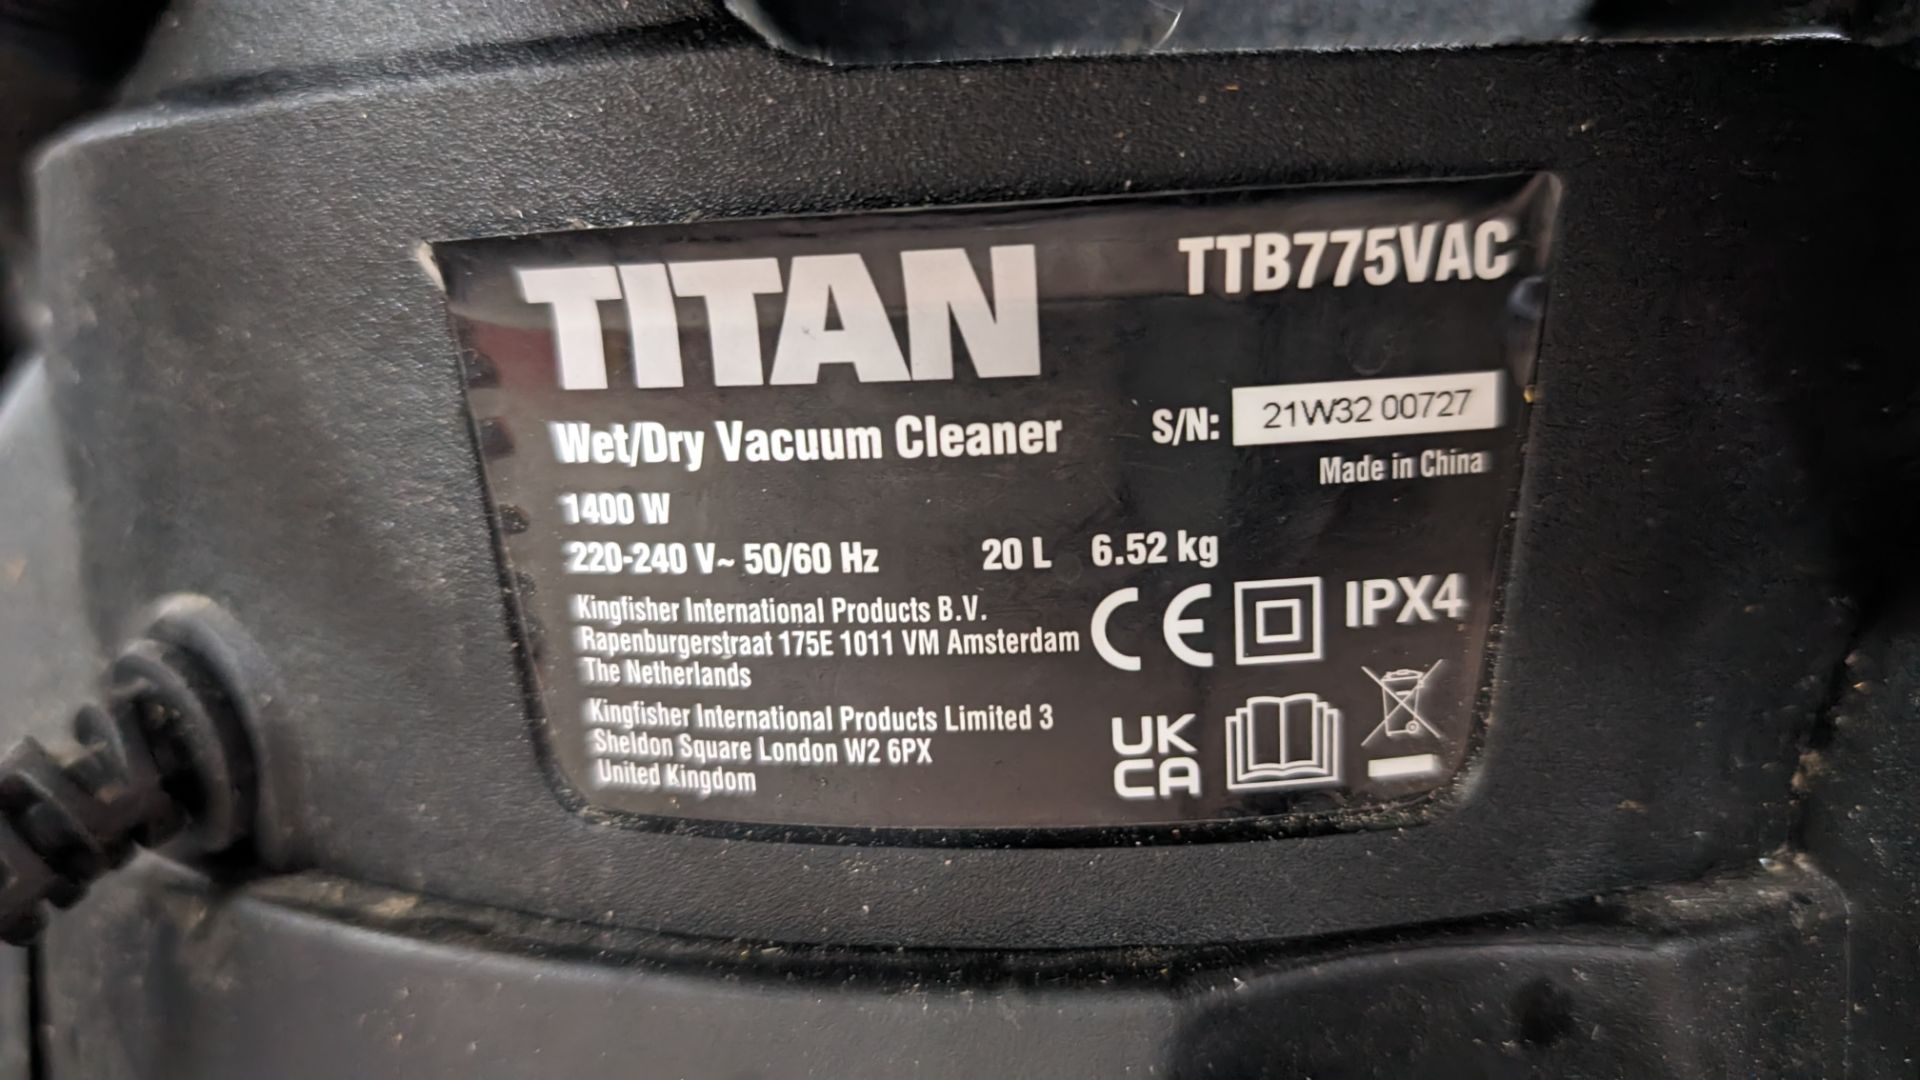 Titan commercial vacuum cleaner - Image 5 of 8